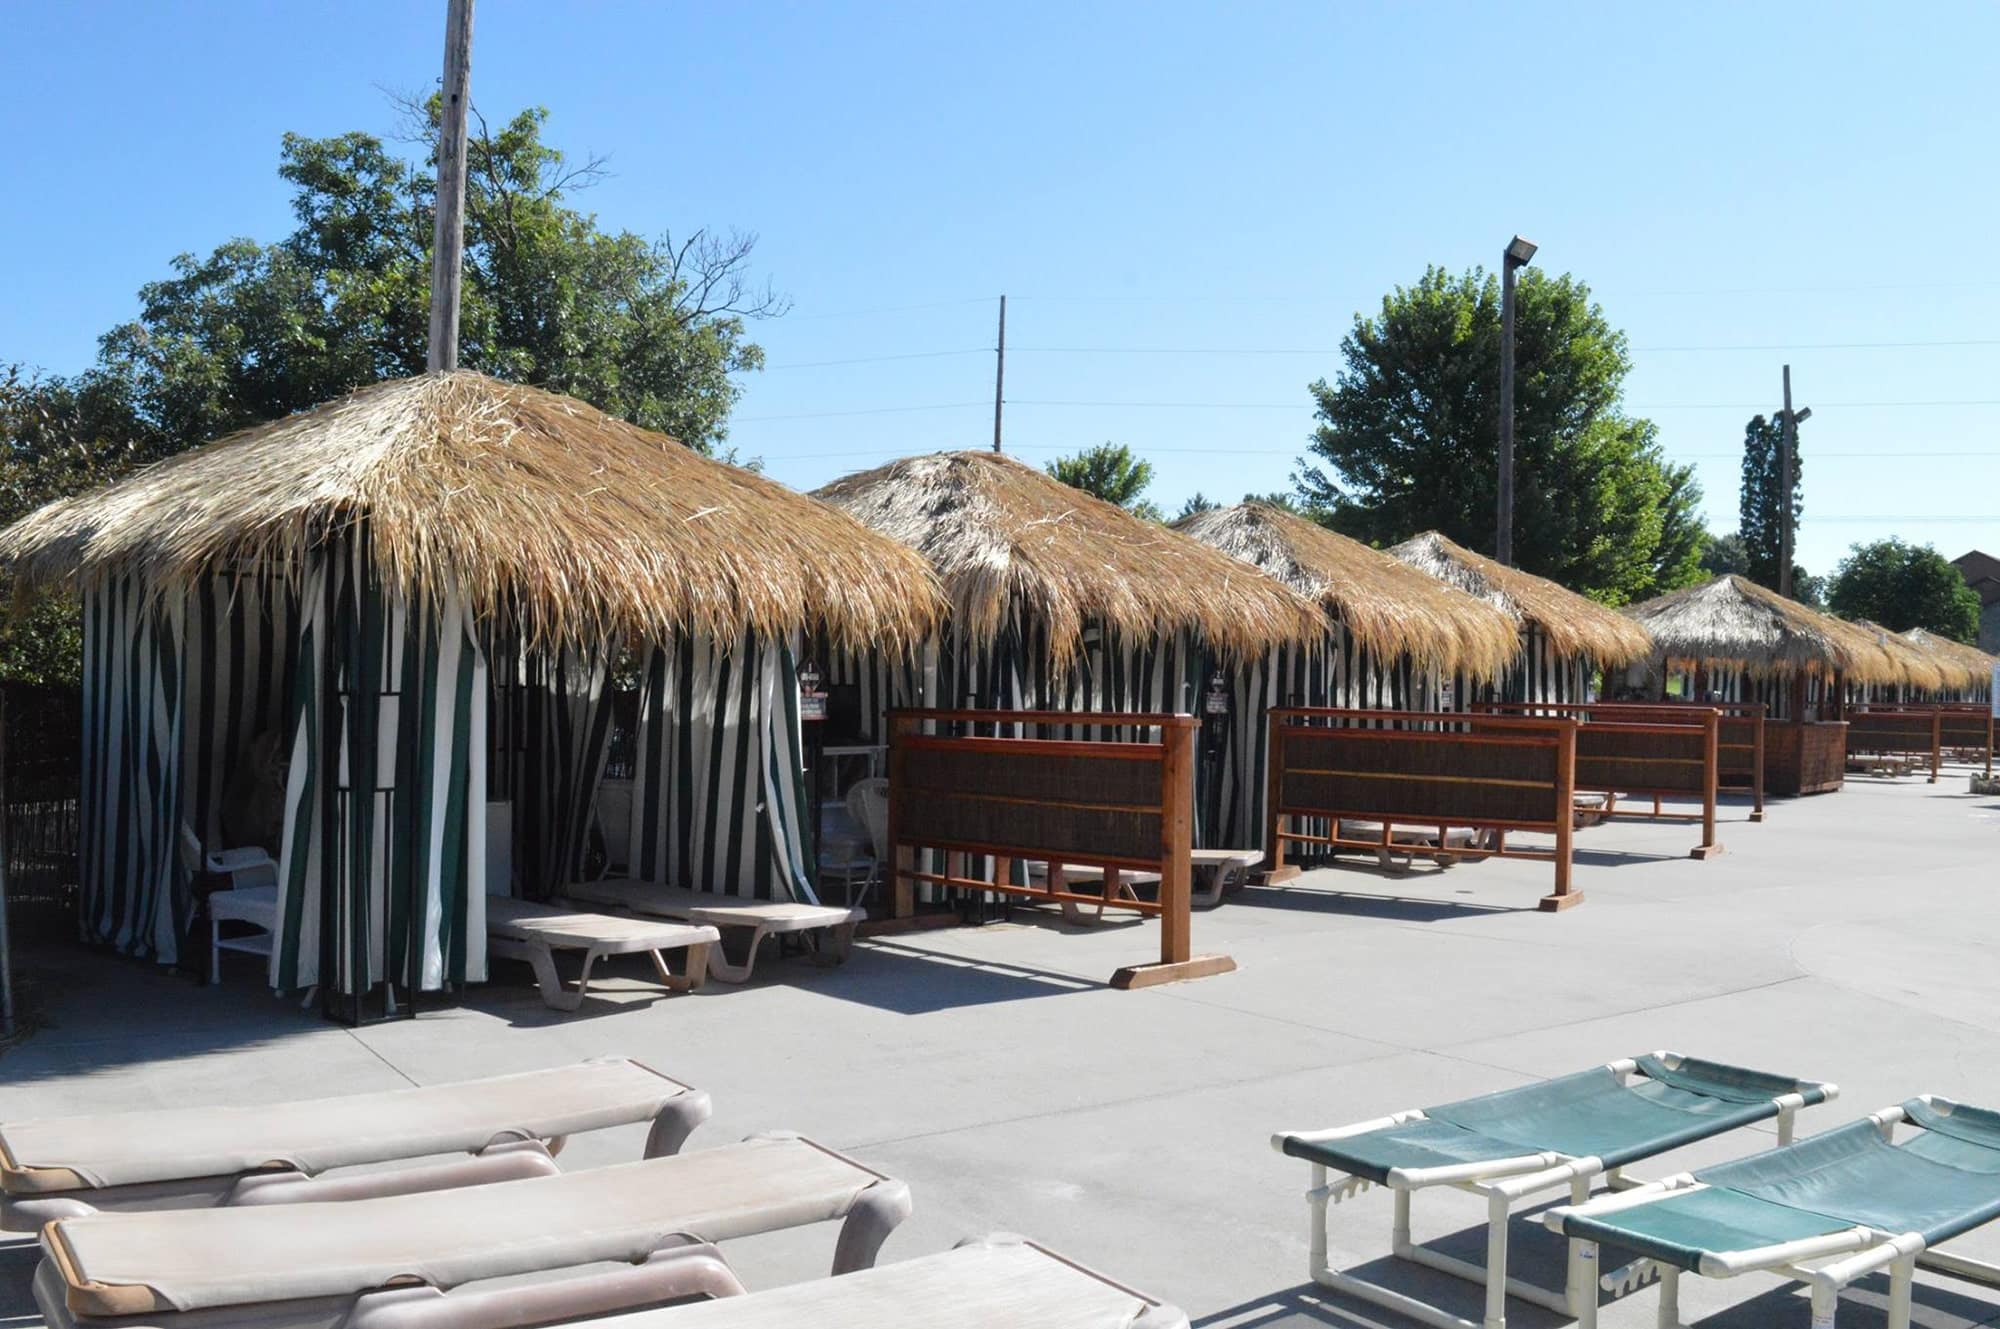 Featured image for “Shaded Paradise: Enjoy a Cabana at Chula Vista Resort”